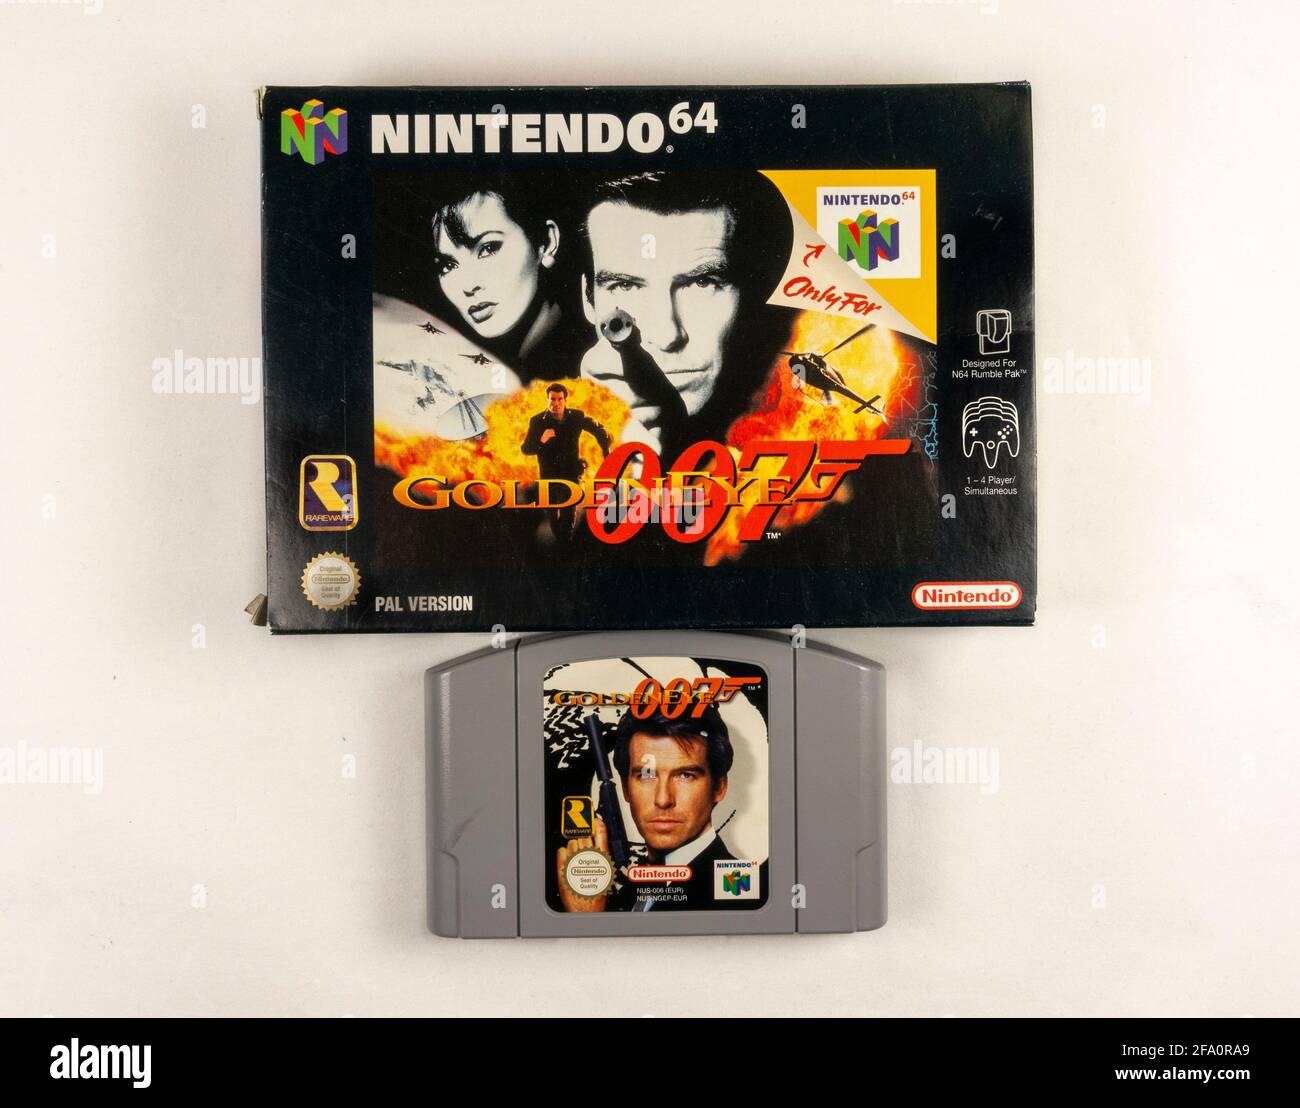  GoldenEye 007 : Nintendo 64: Video Games